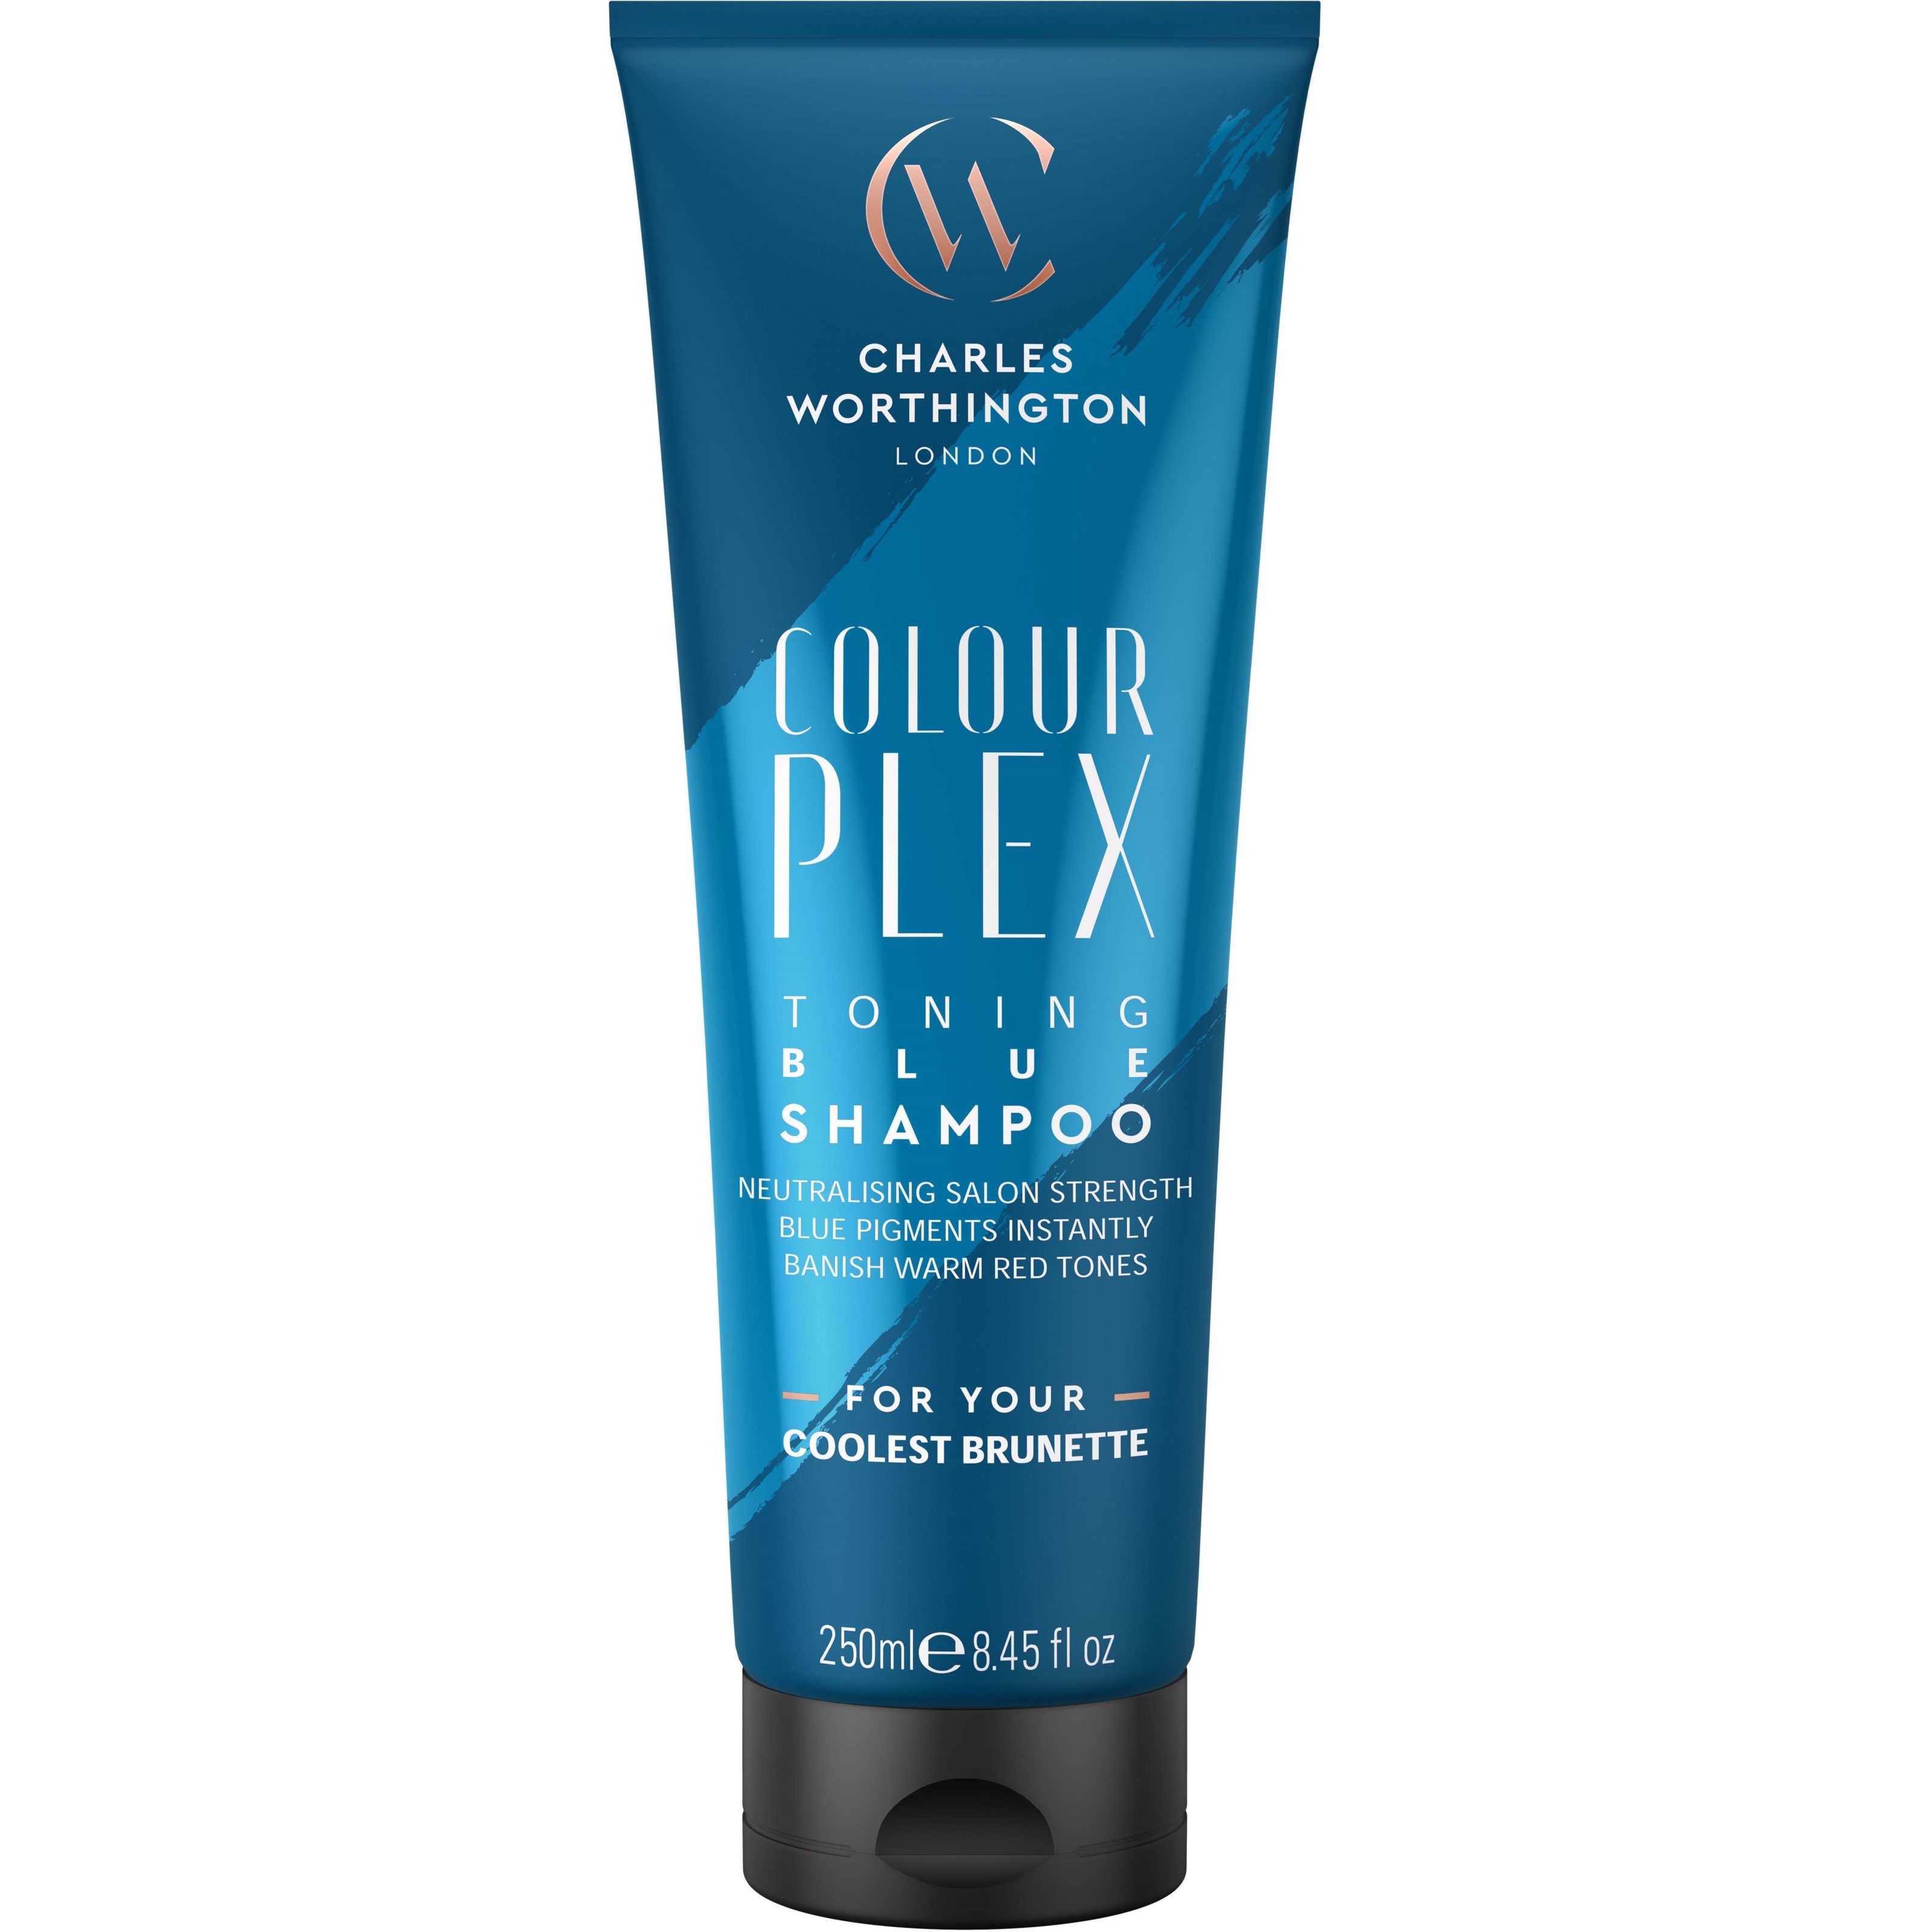 Bilde av Charles Worthington Colourplex Toning Blue Shampoo 250 Ml